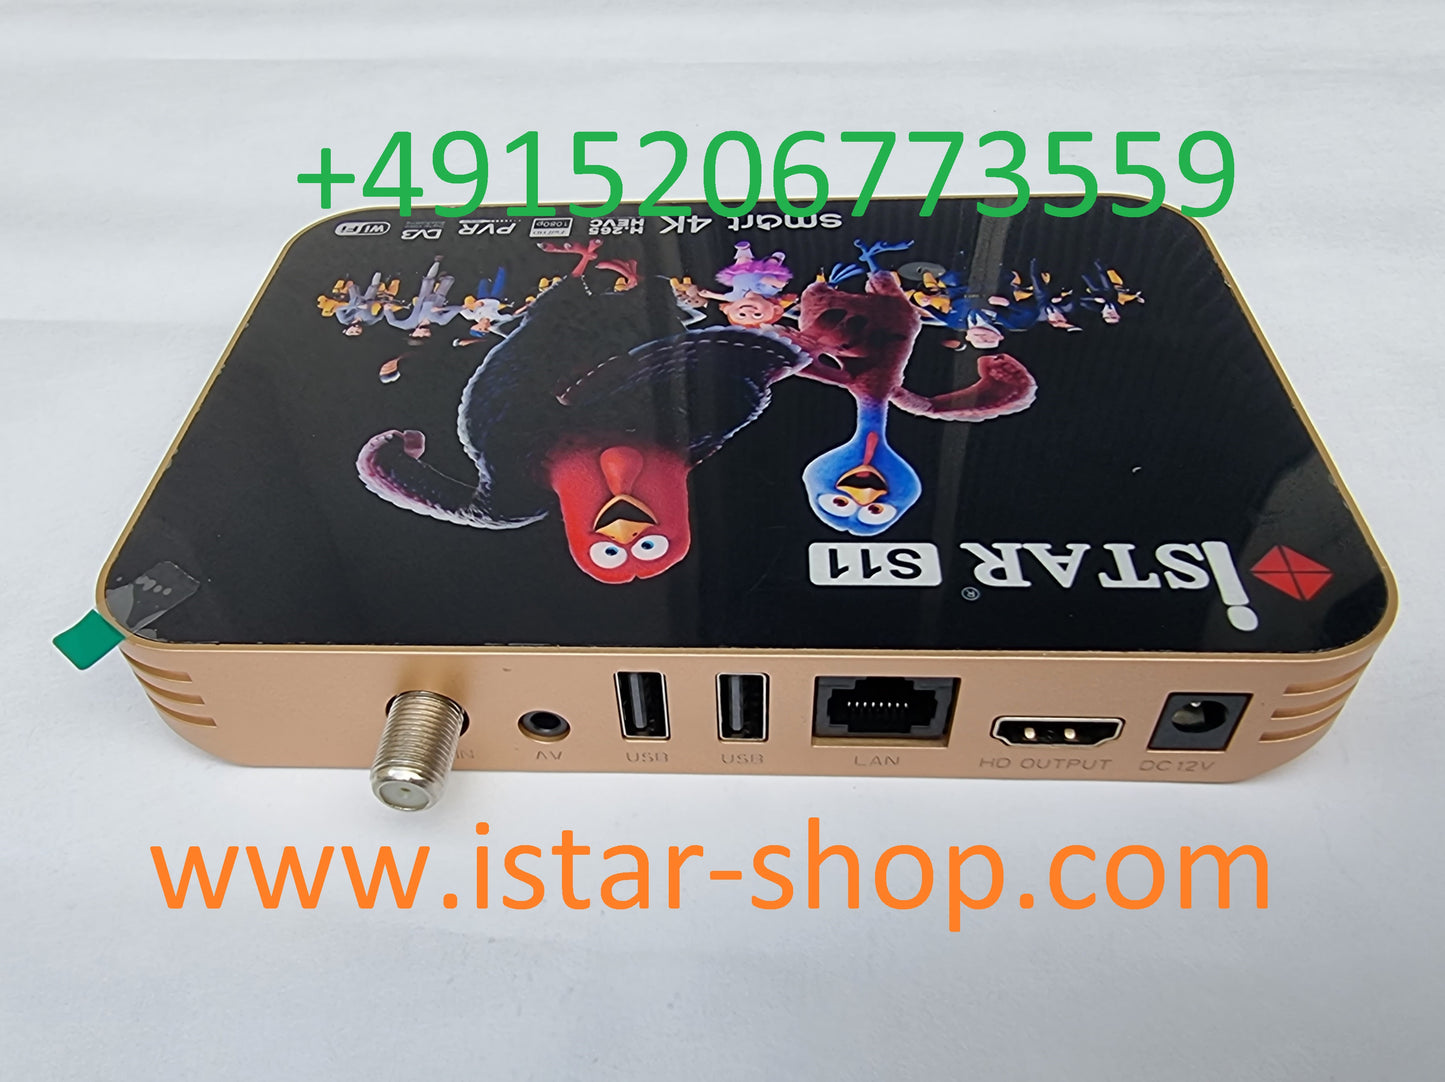 iStar S11 Android 4K UHD TVBOX Sat Receiver OnlineTV Online TV Digital Box zina tv istar S-11 zinatv HD FHD satellit satellite